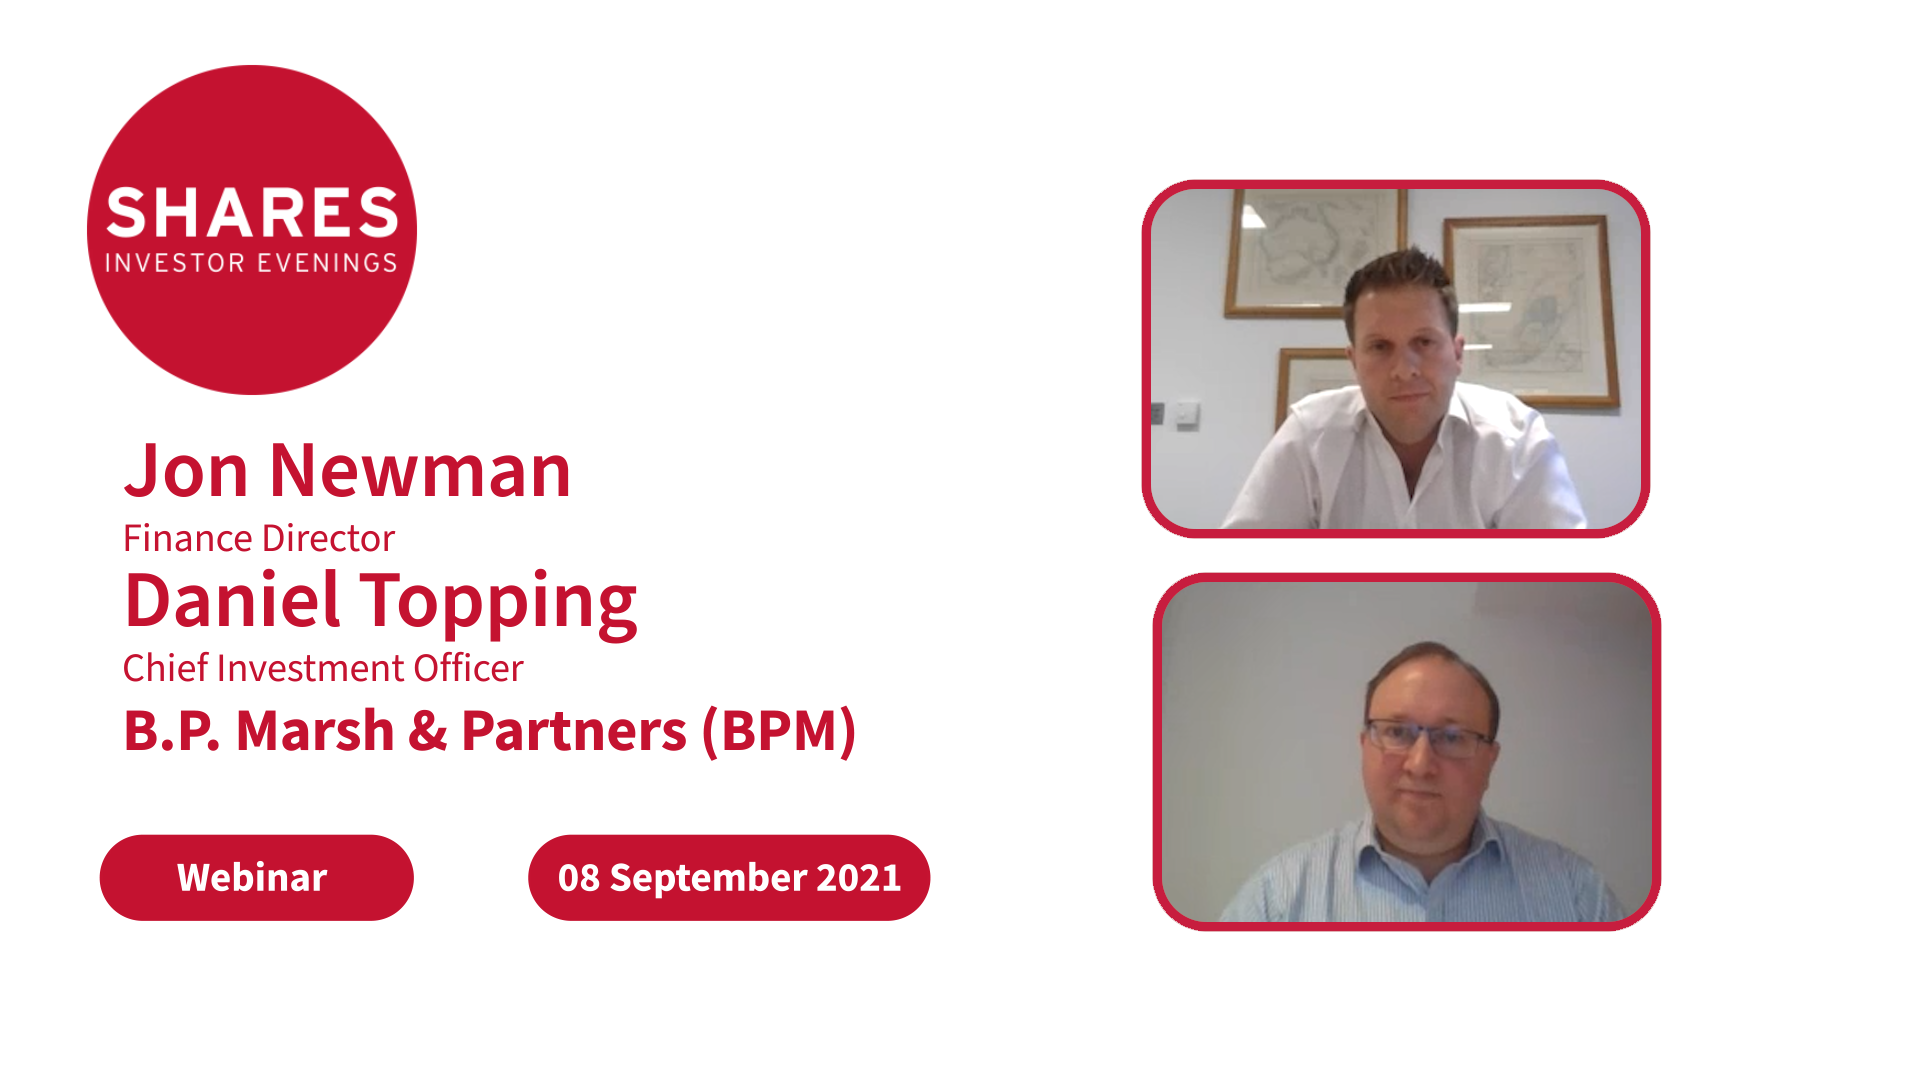 B.P. Marsh & Partners(BPM) - Daniel Topping, Chief Investment Officer & Jon Newman, Finance Director